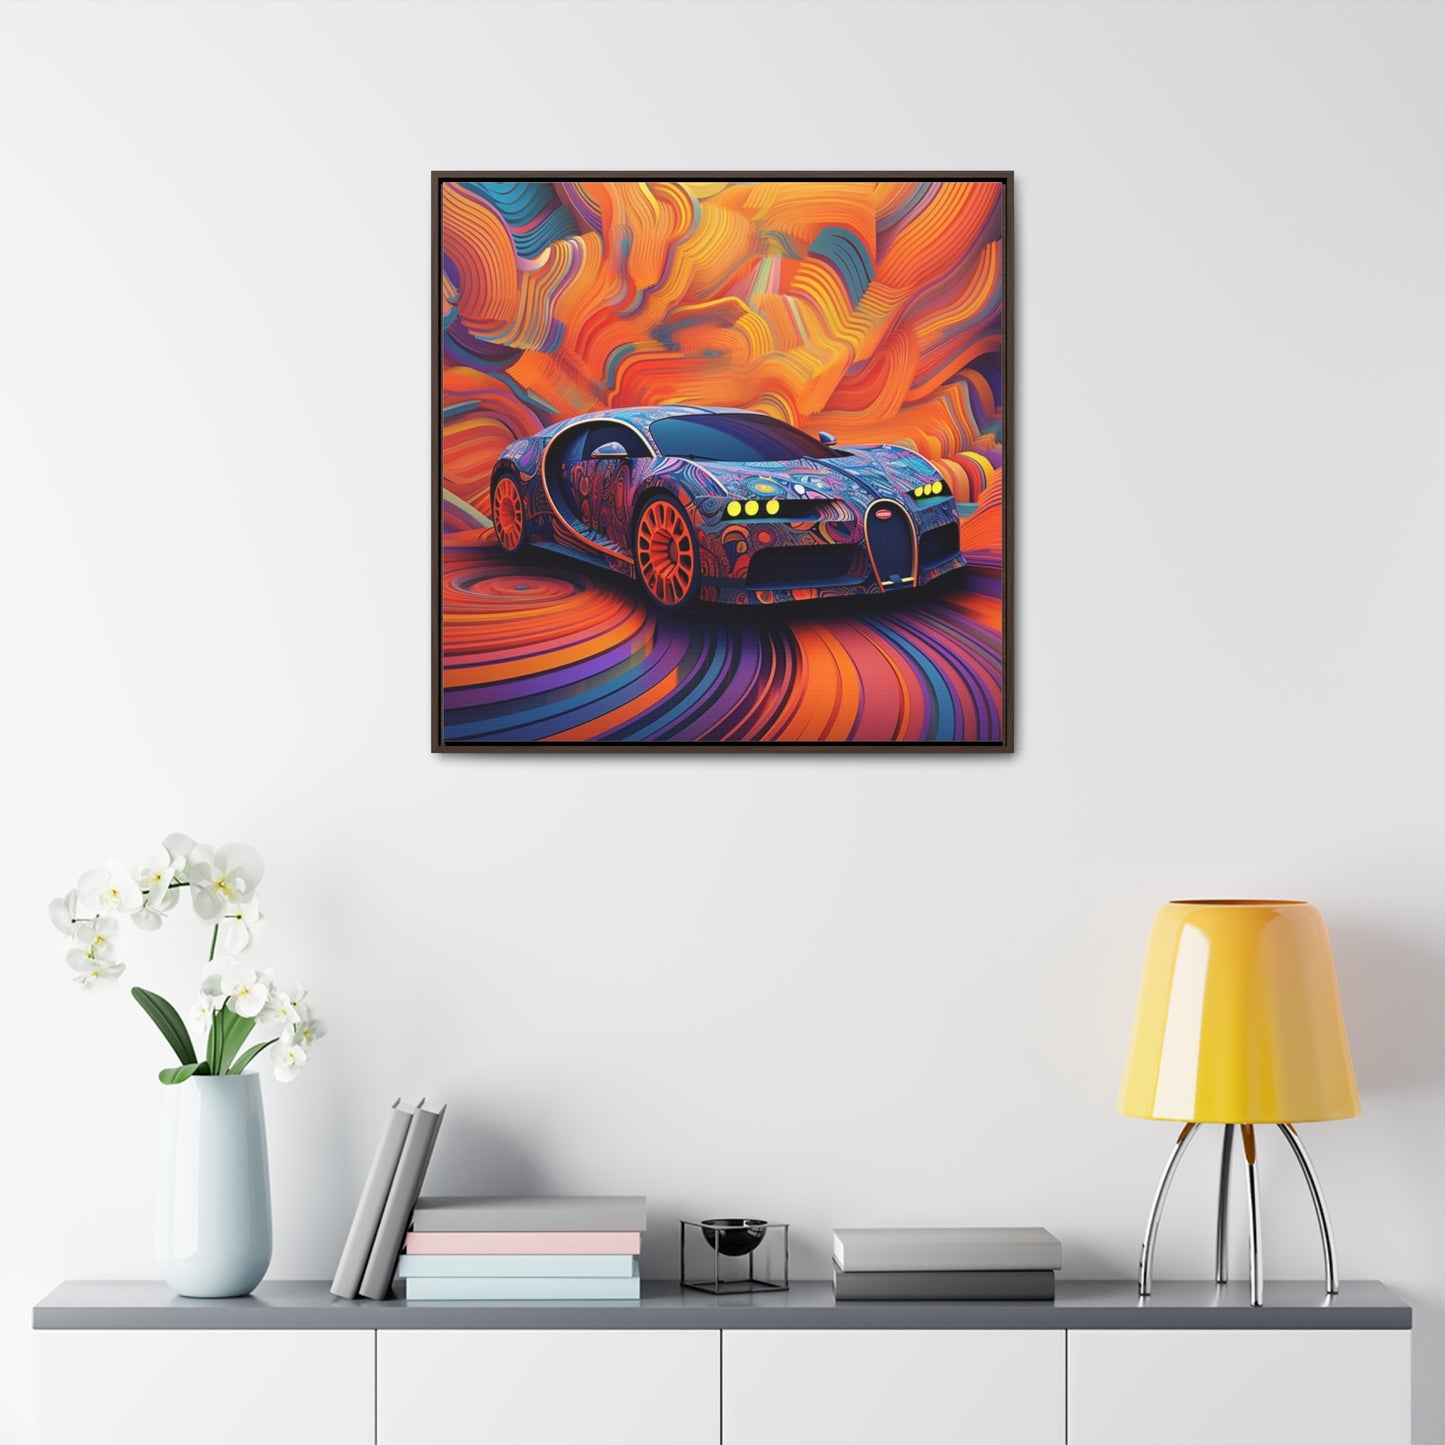 Gallery Canvas Wraps, Square Frame Bugatti Abstract Concept 4